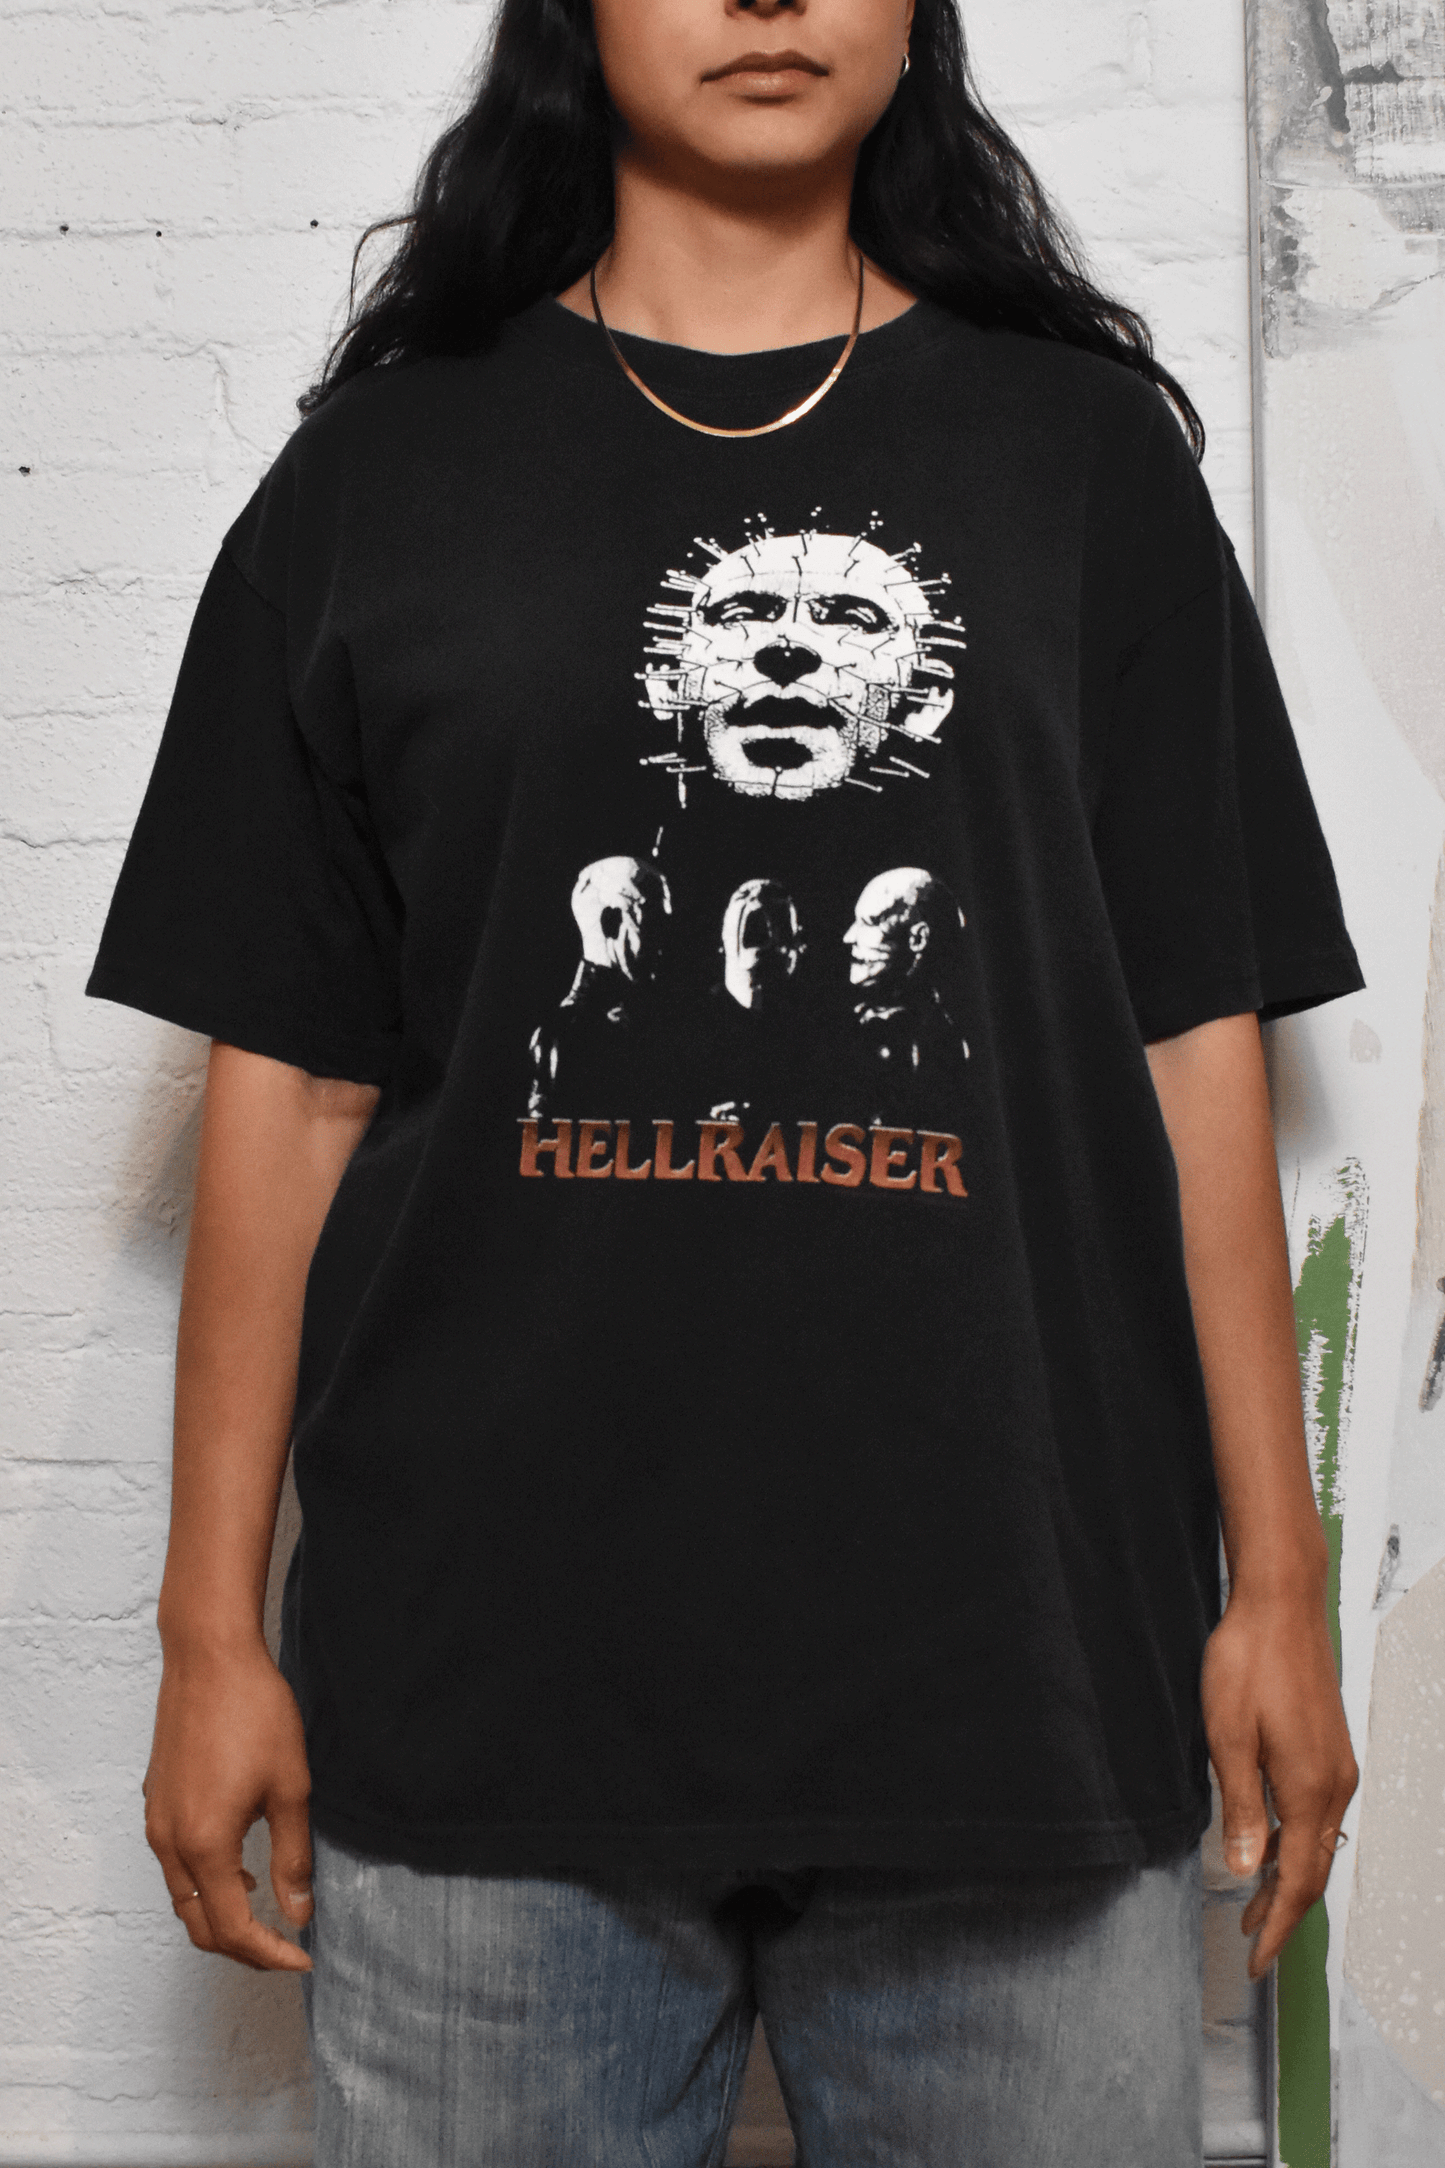 Vintage 2006 "Hellraiser" Promo Movie T-shirt